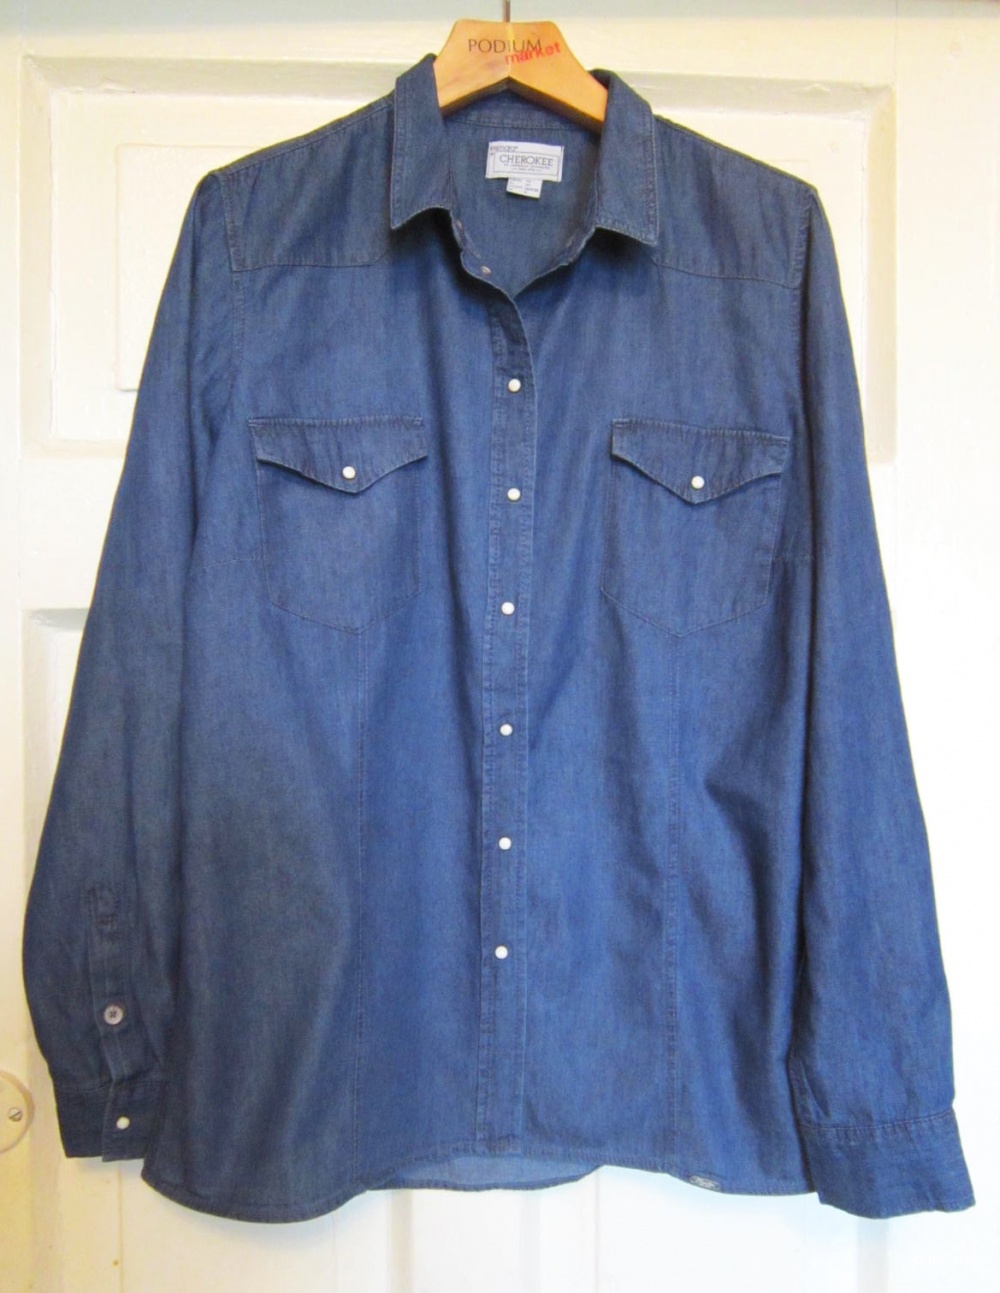 Джинсовая рубашка, Esmara cherokee, 48/50 размер, L.